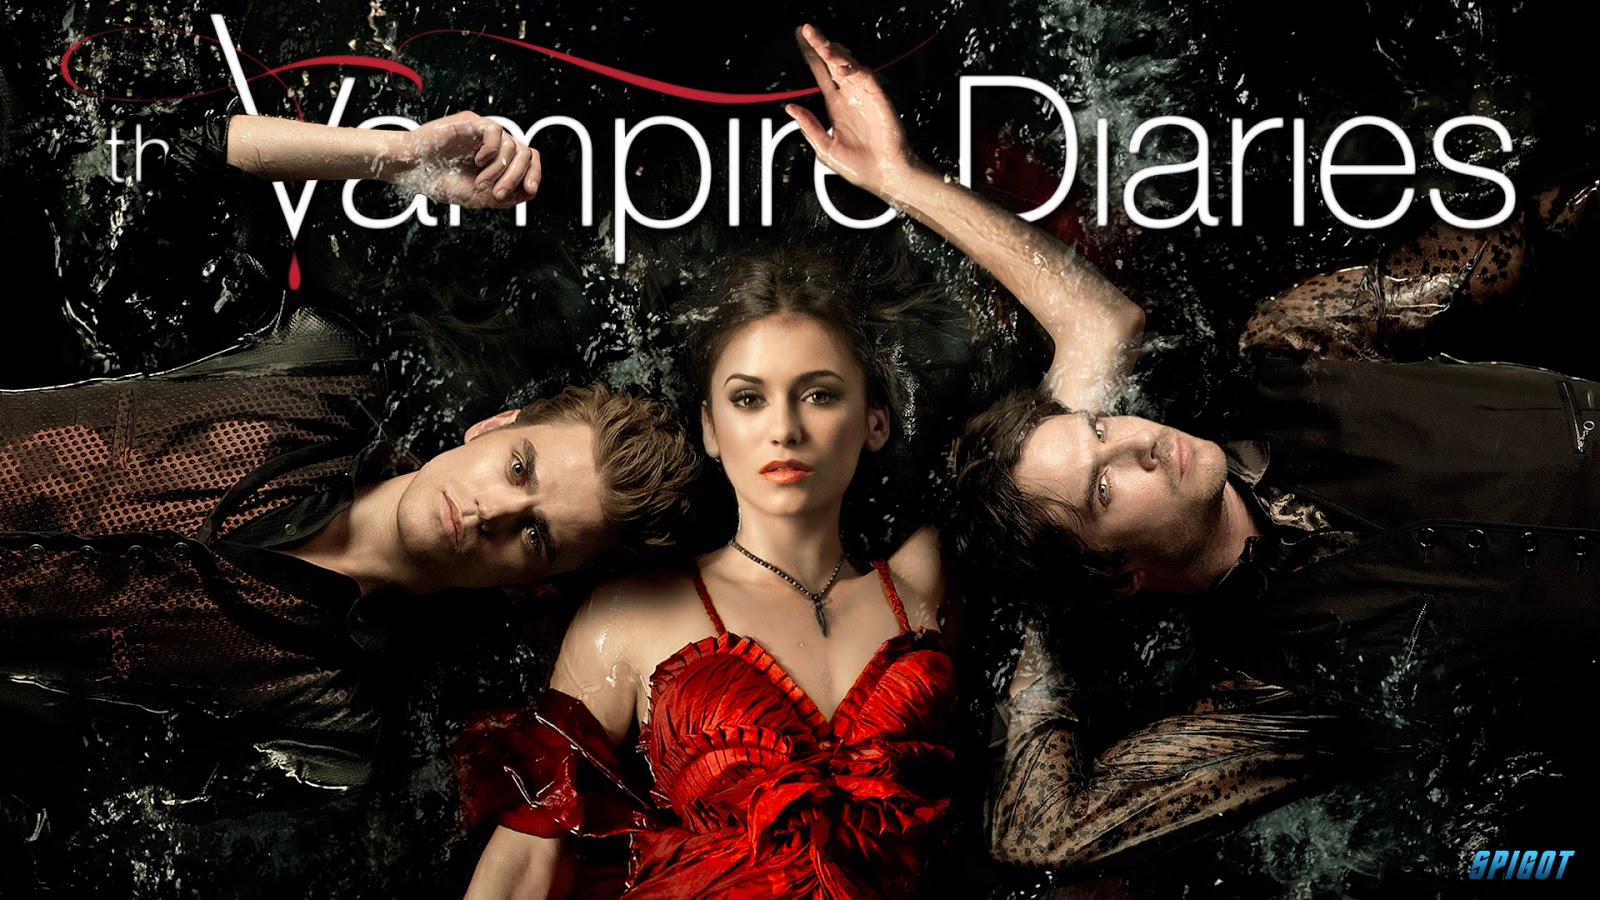 Assistir The Vampire Diaries - ver séries online